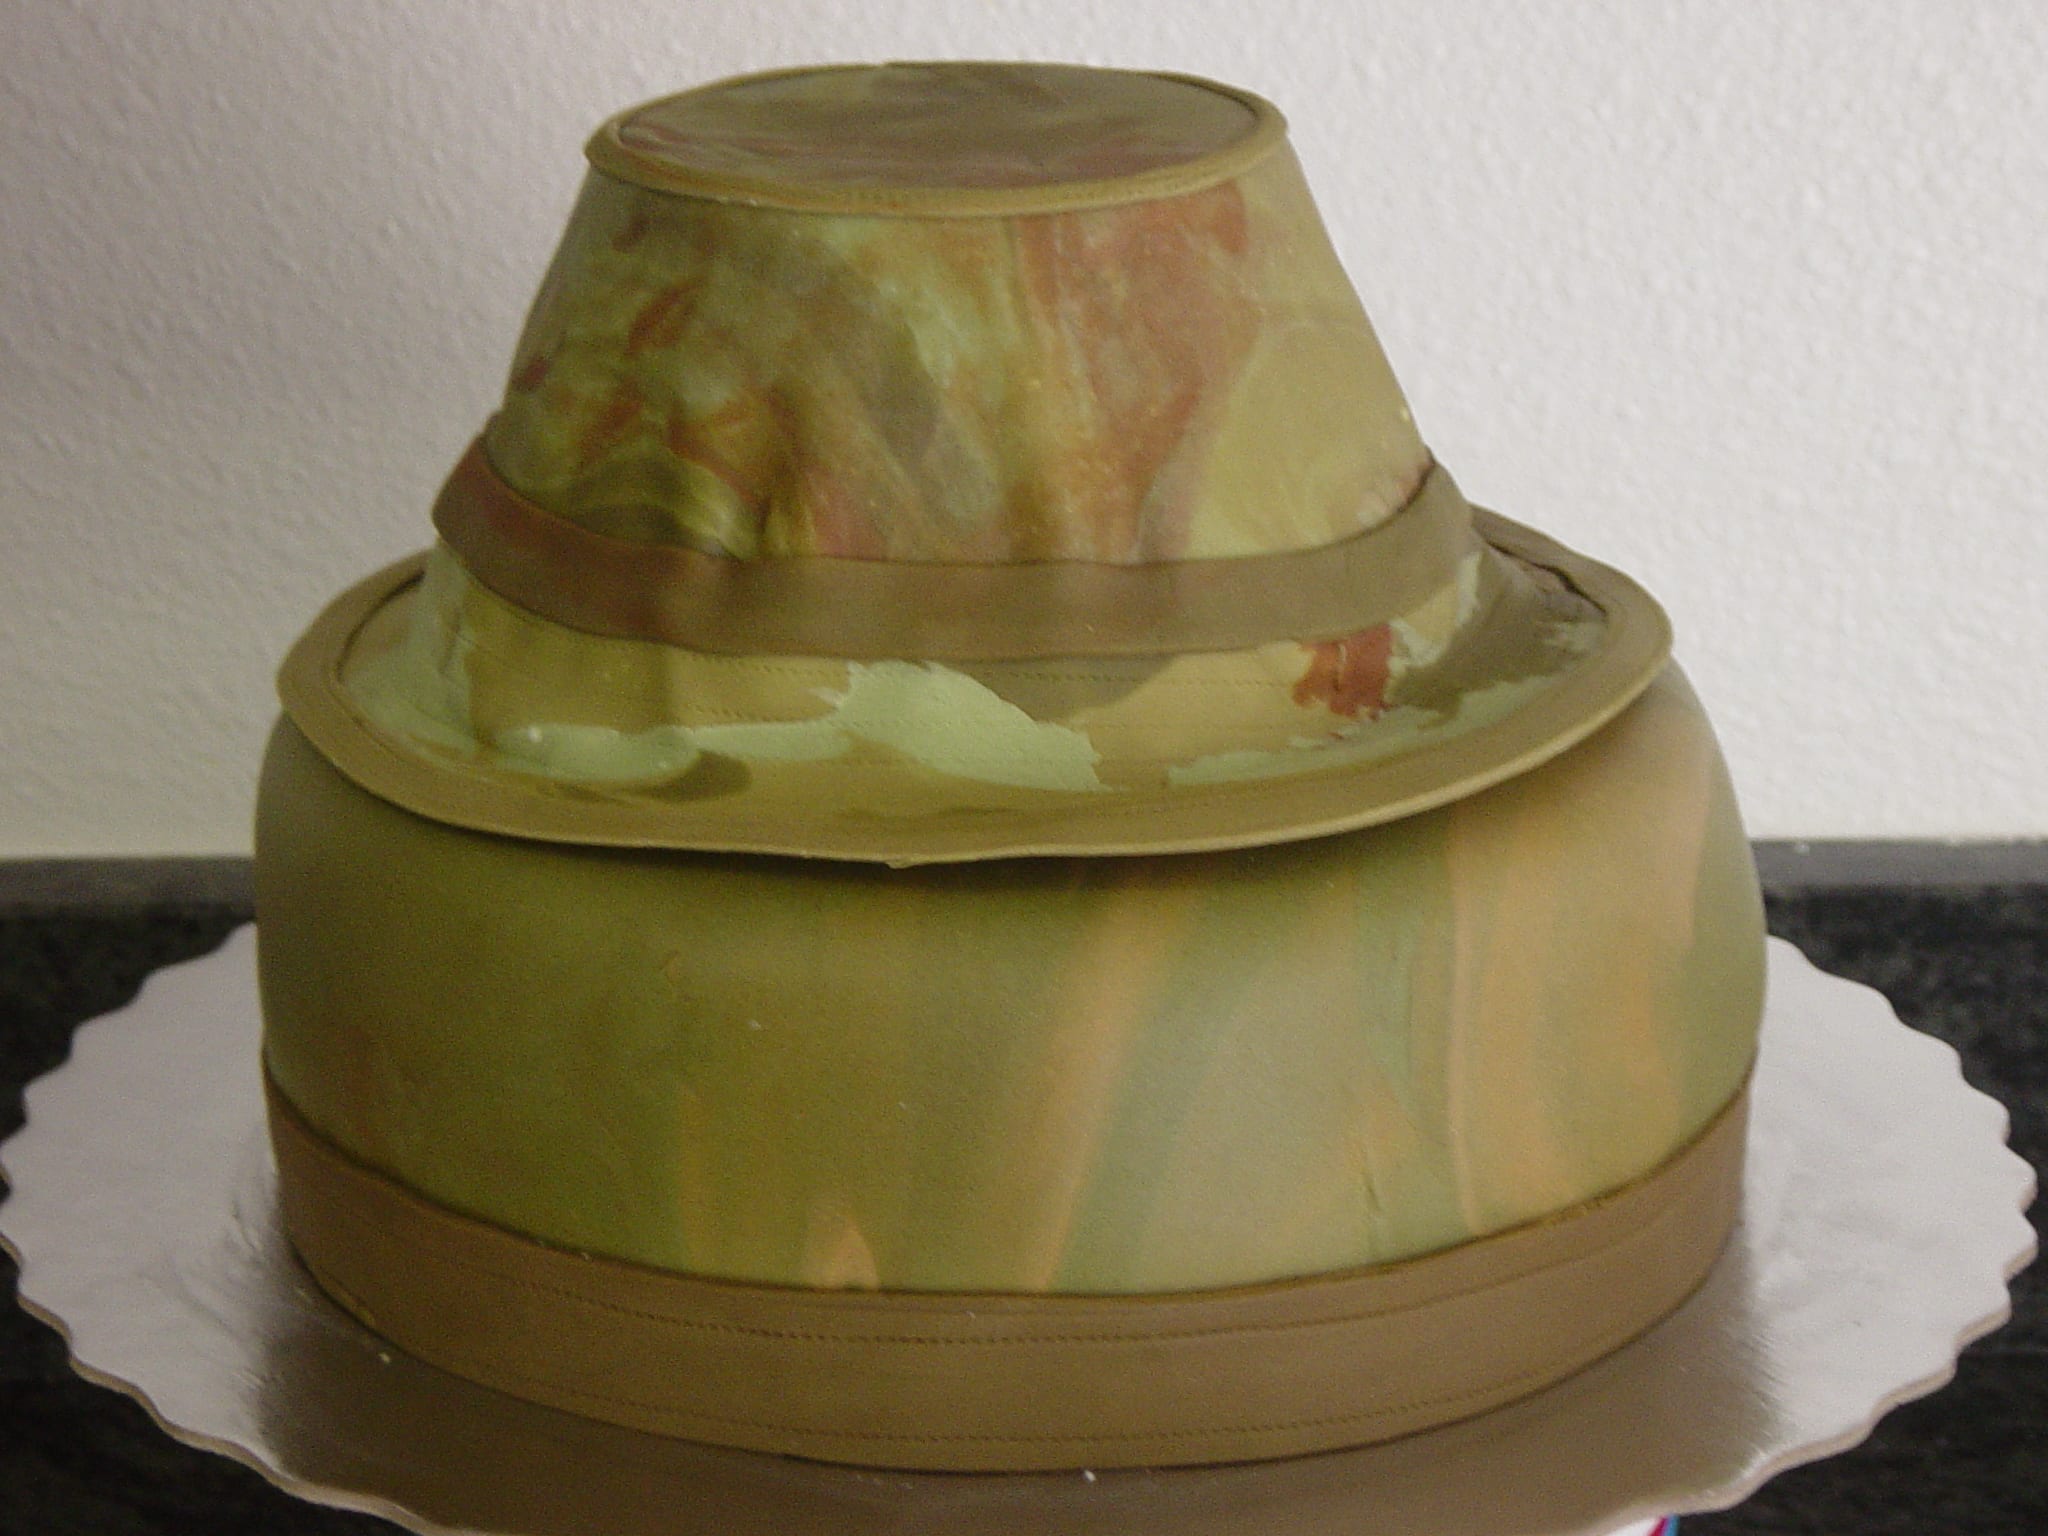 Army-cake